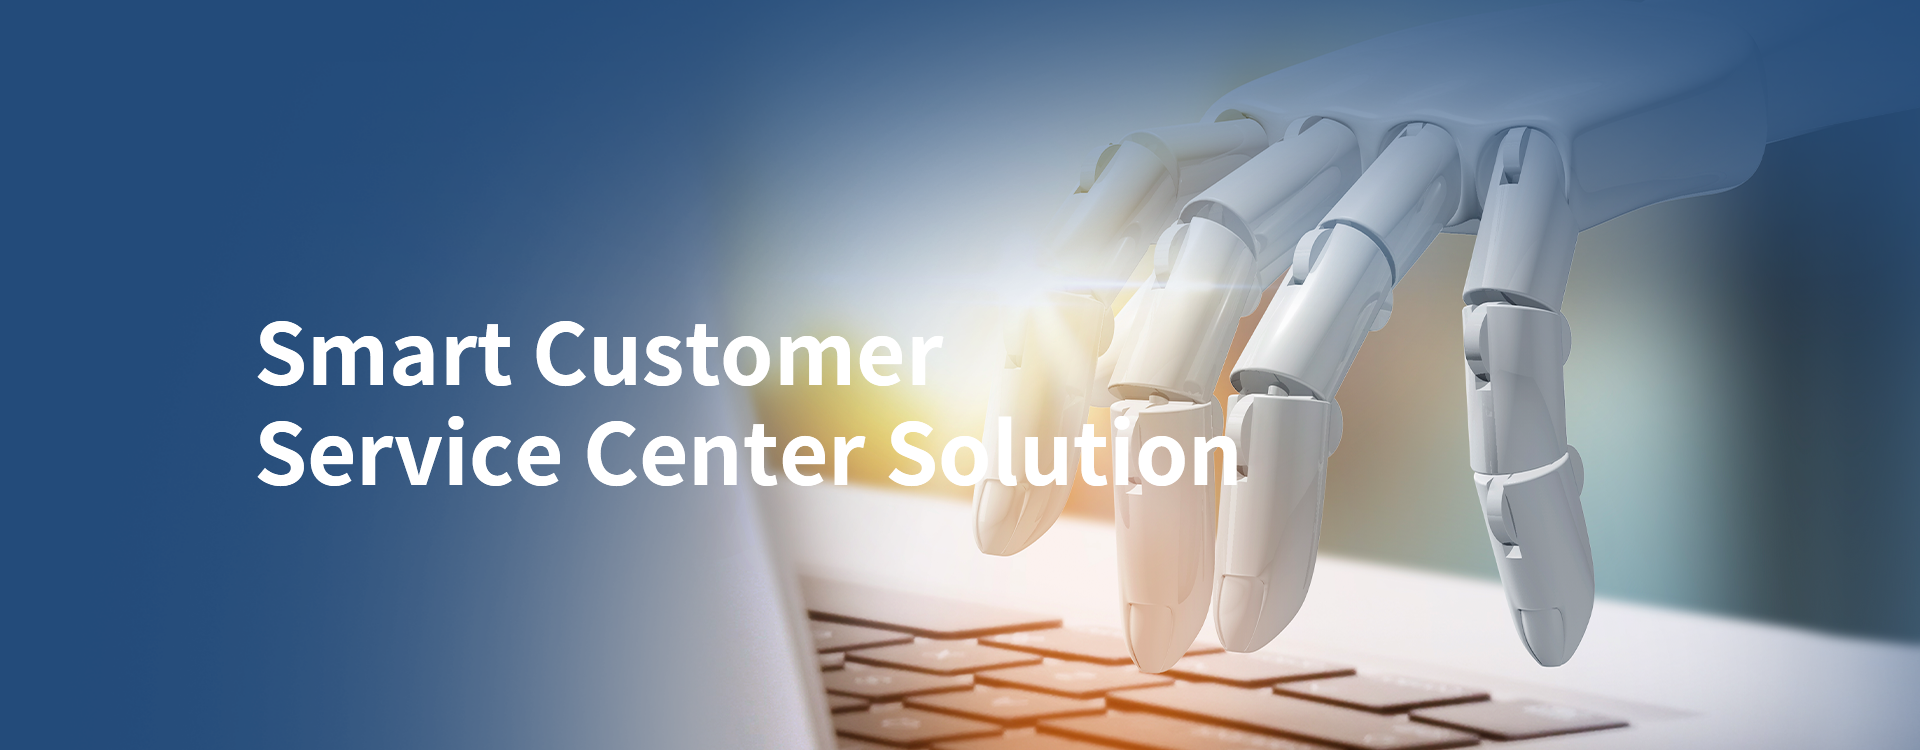 Intelligent customer service center